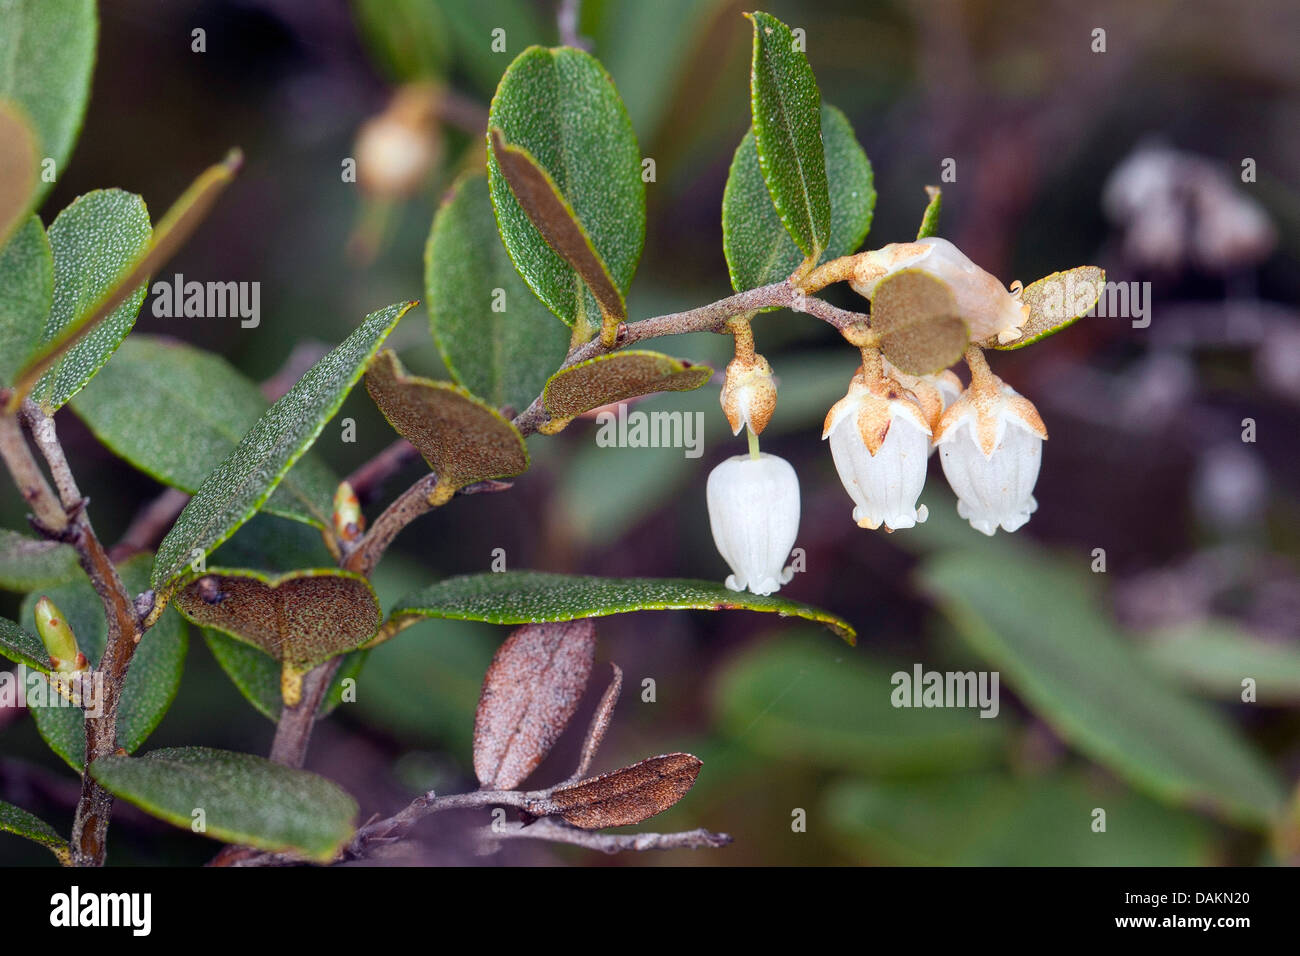 Cassandra, Leatherleaf (Chamaedaphne calyculata), blooming Stock Photo